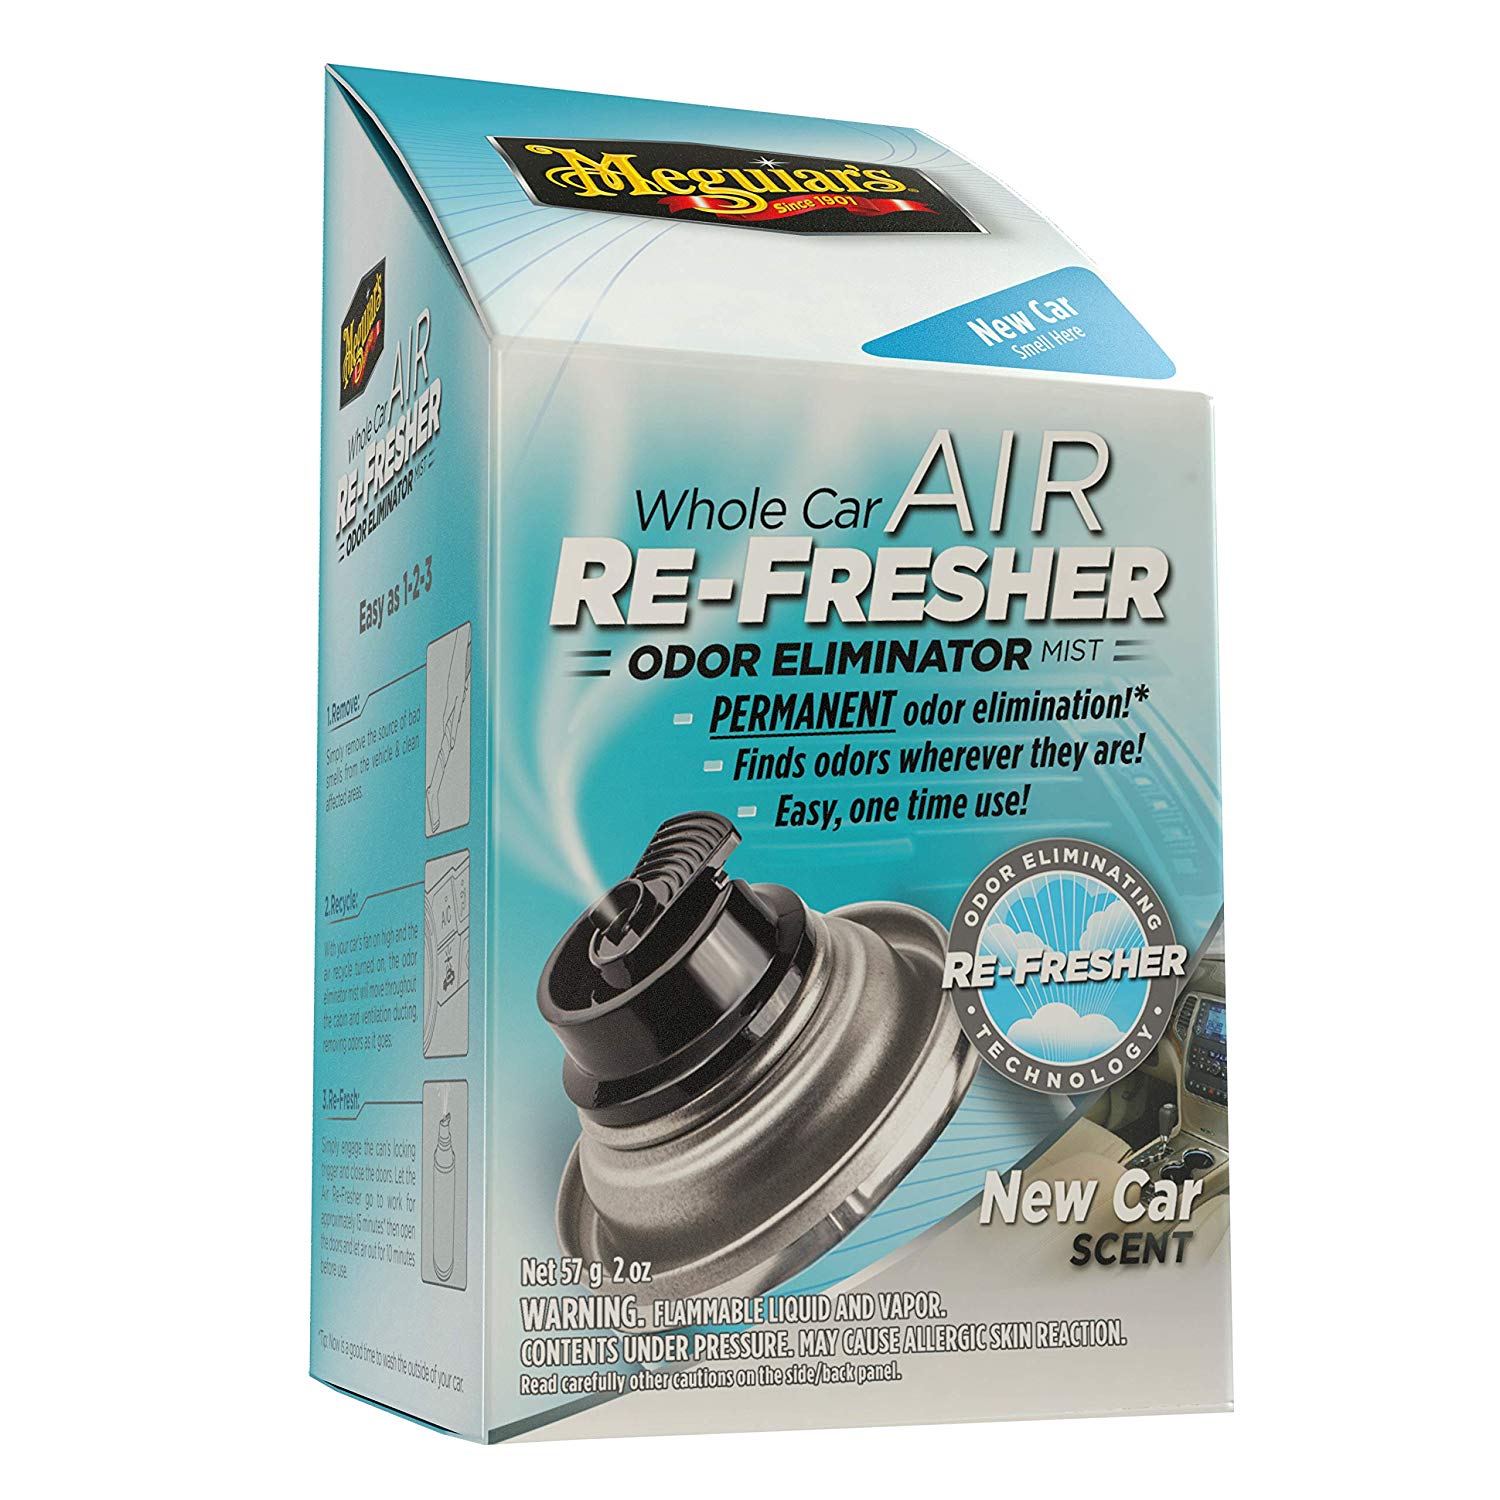 MEGUIAR'S G16402 Whole Car Air Re-Fresher Odor Eliminator Mist